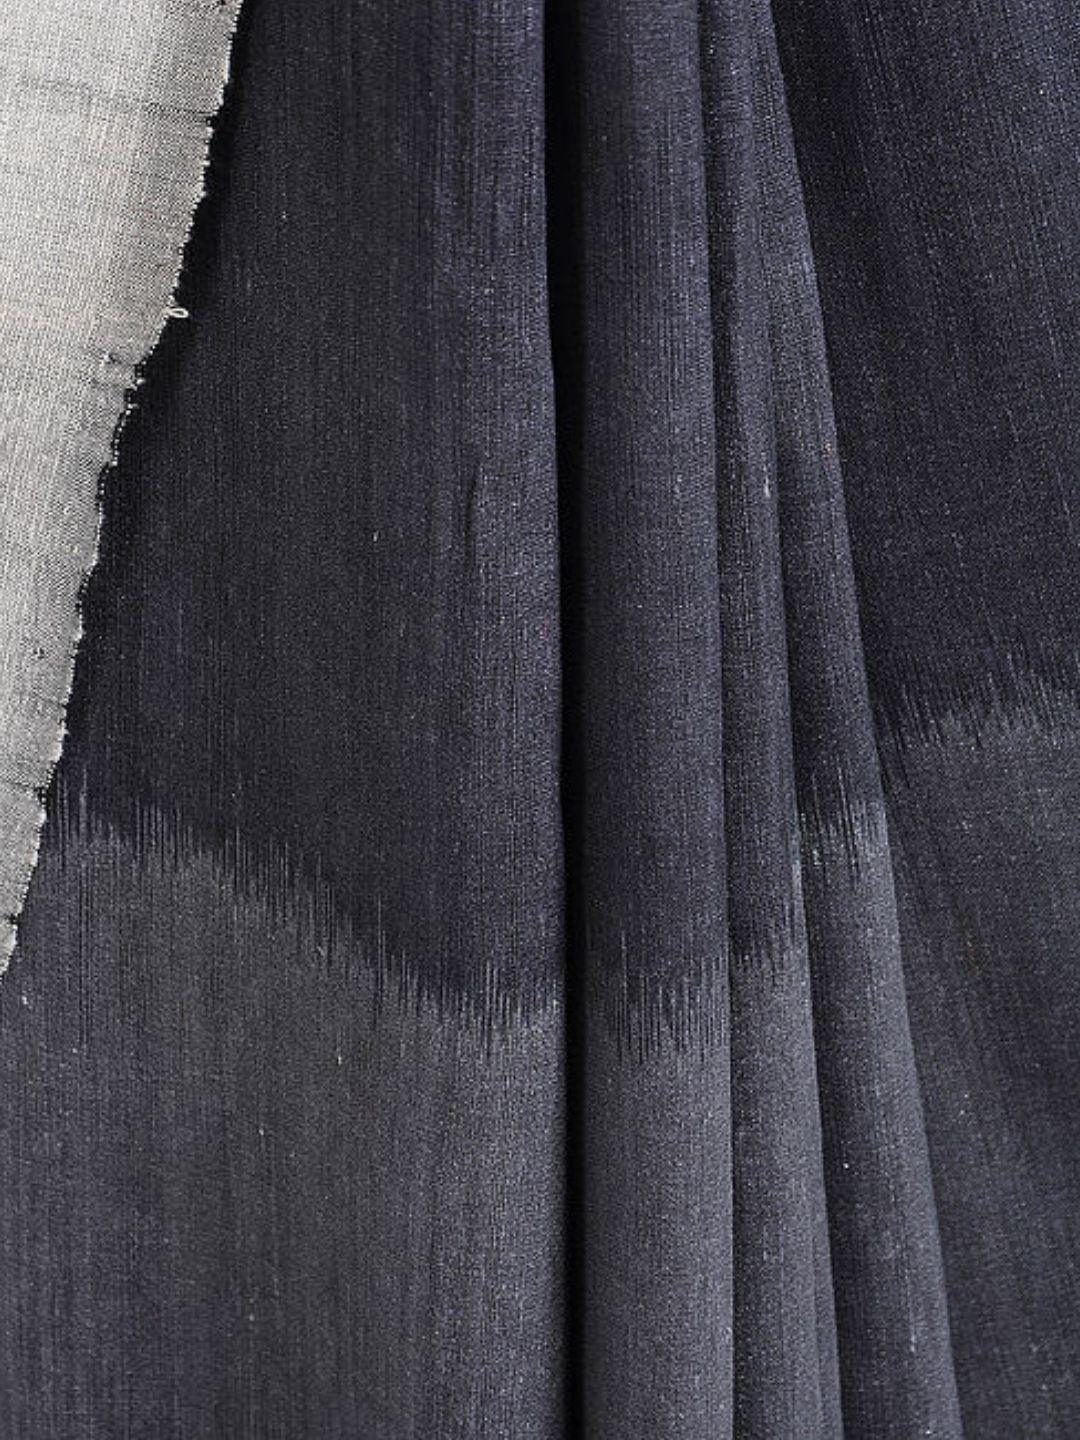 Black Eri Tussar silk shaded saree - Crafts Collection